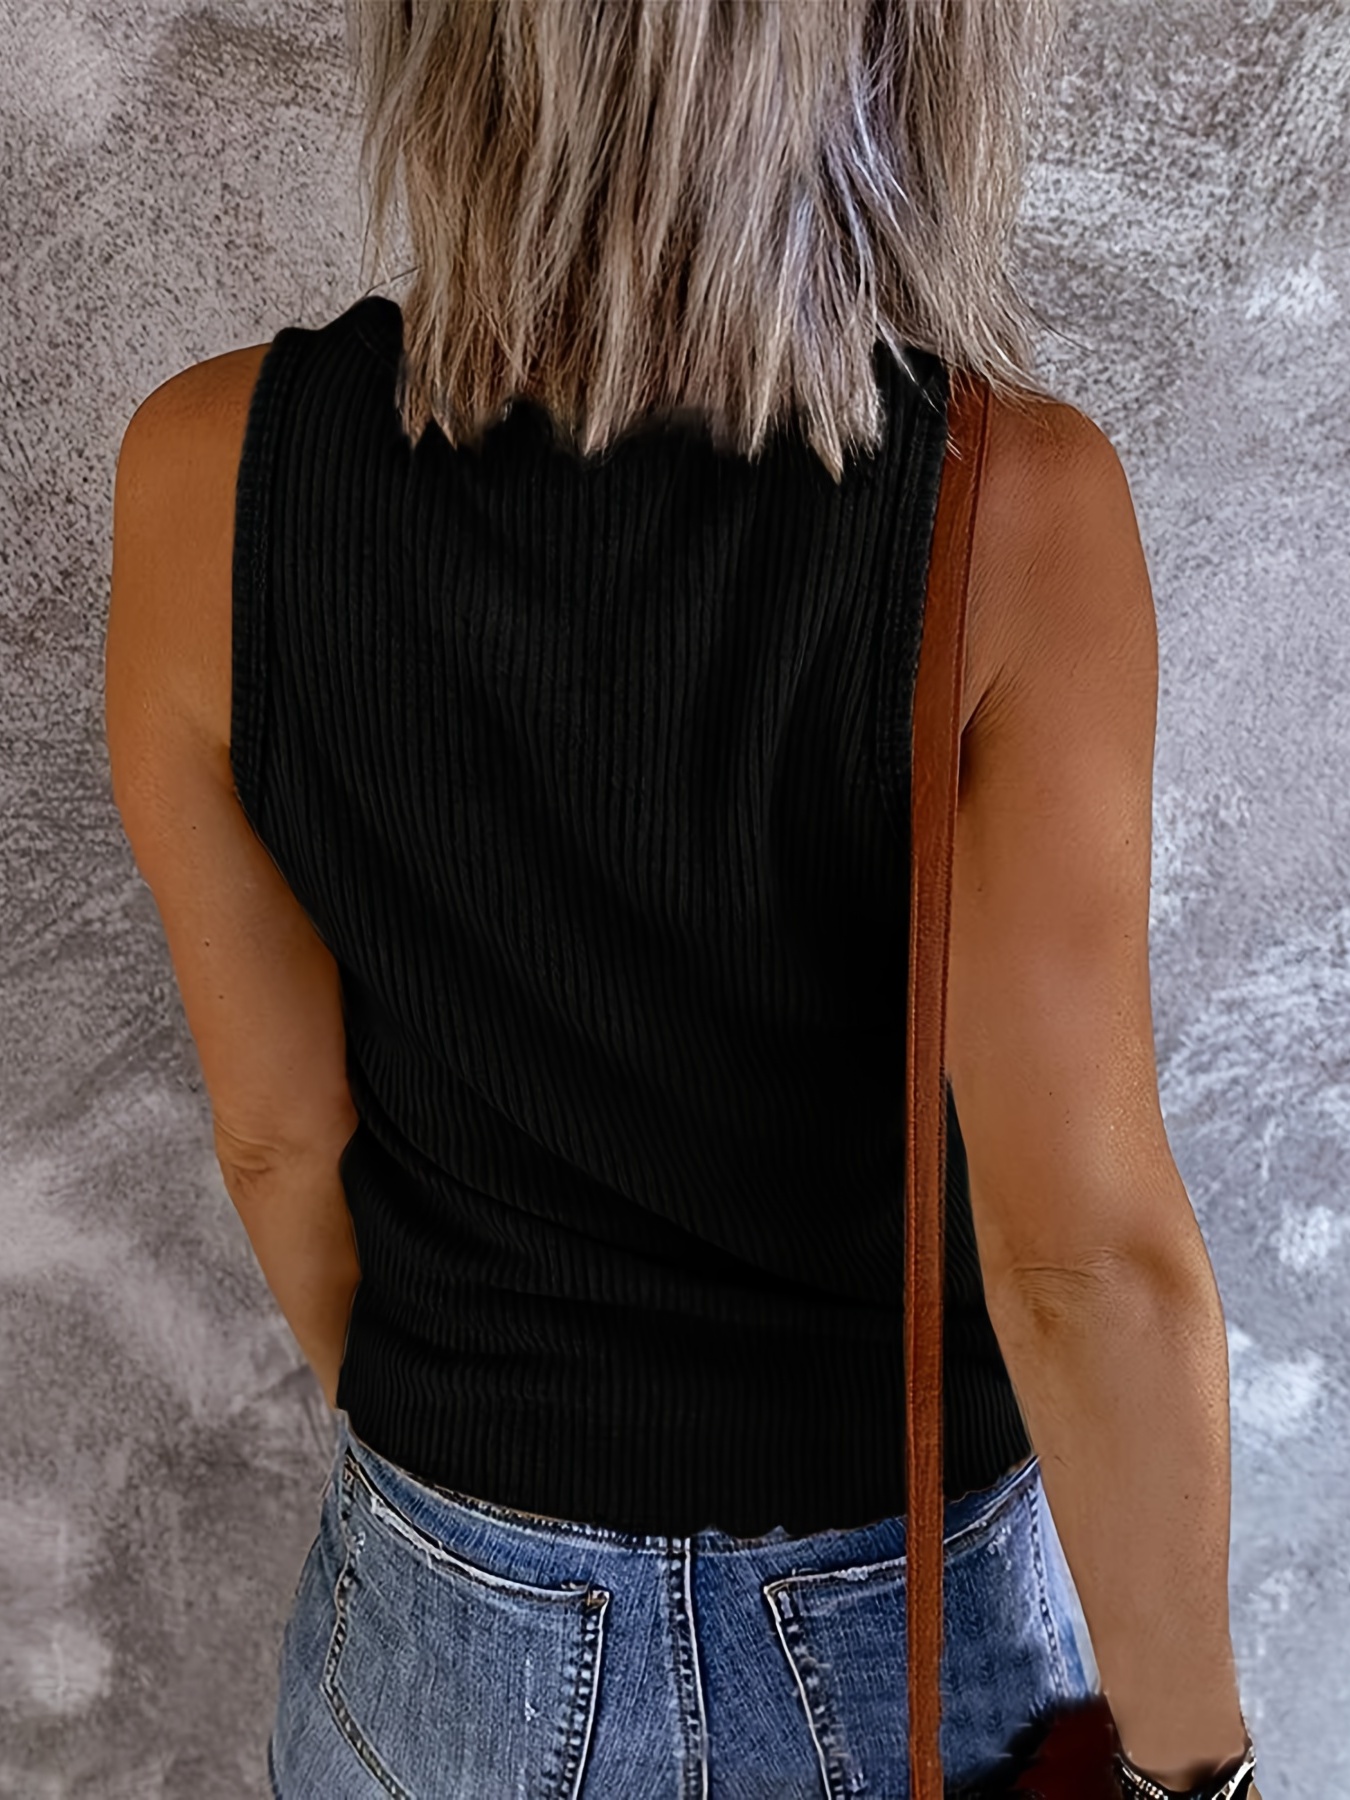 Women's Basic Square Neck Tank Top Cotton Stretch Knit Solid Plain  Sleeveless